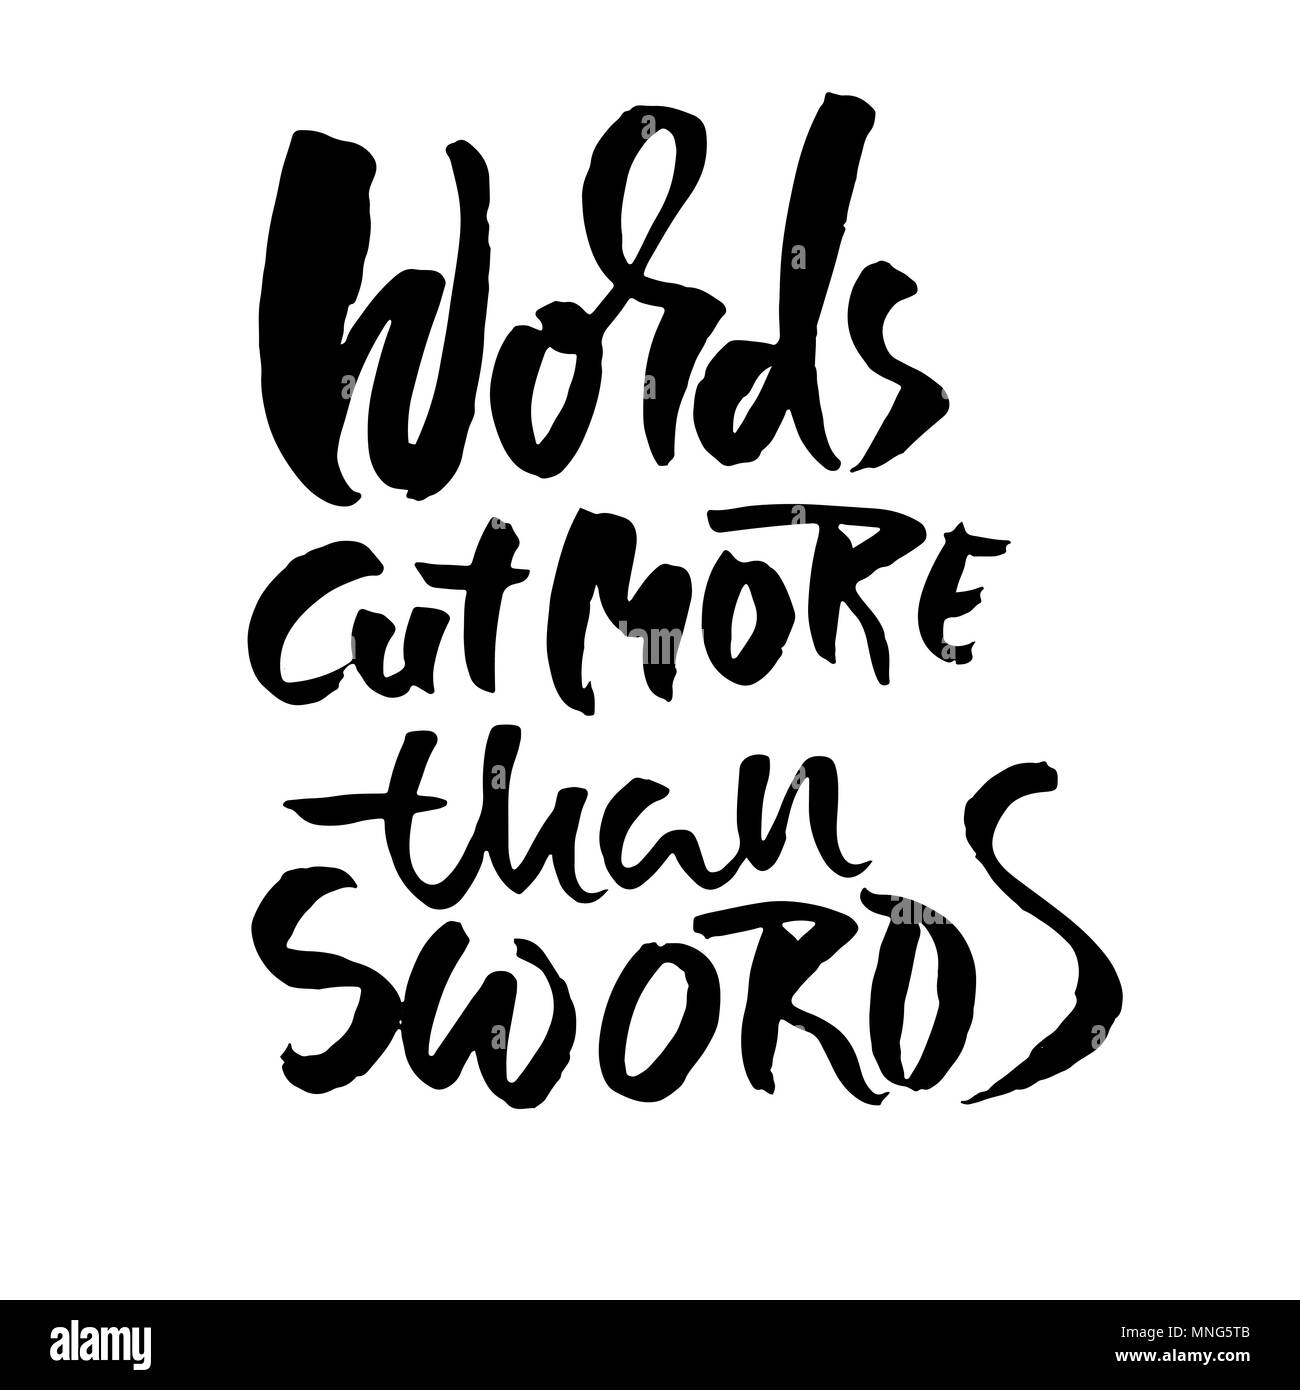 World cut more than swords. Hand drawn dry brush lettering. Ink illustration. Modern calligraphy phrase. Vector illustration. Stock Vector